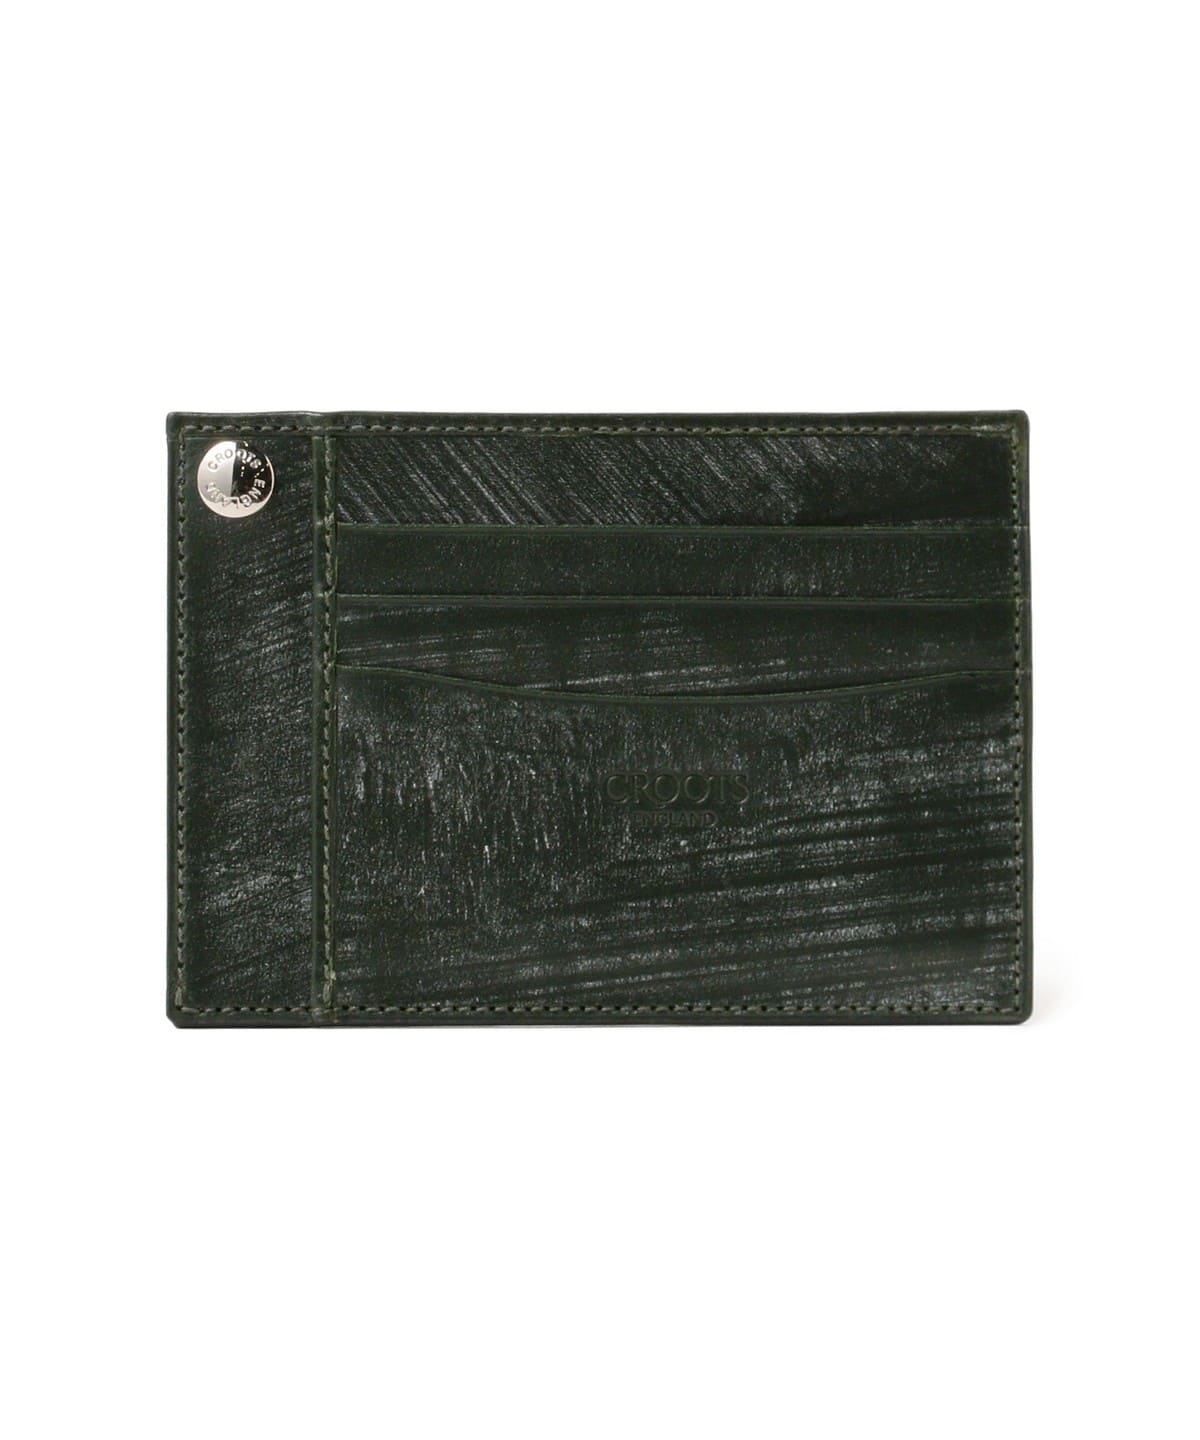 BEAMS F F CROOTS / Bridle leather compact wallet (wallet BEAMS 